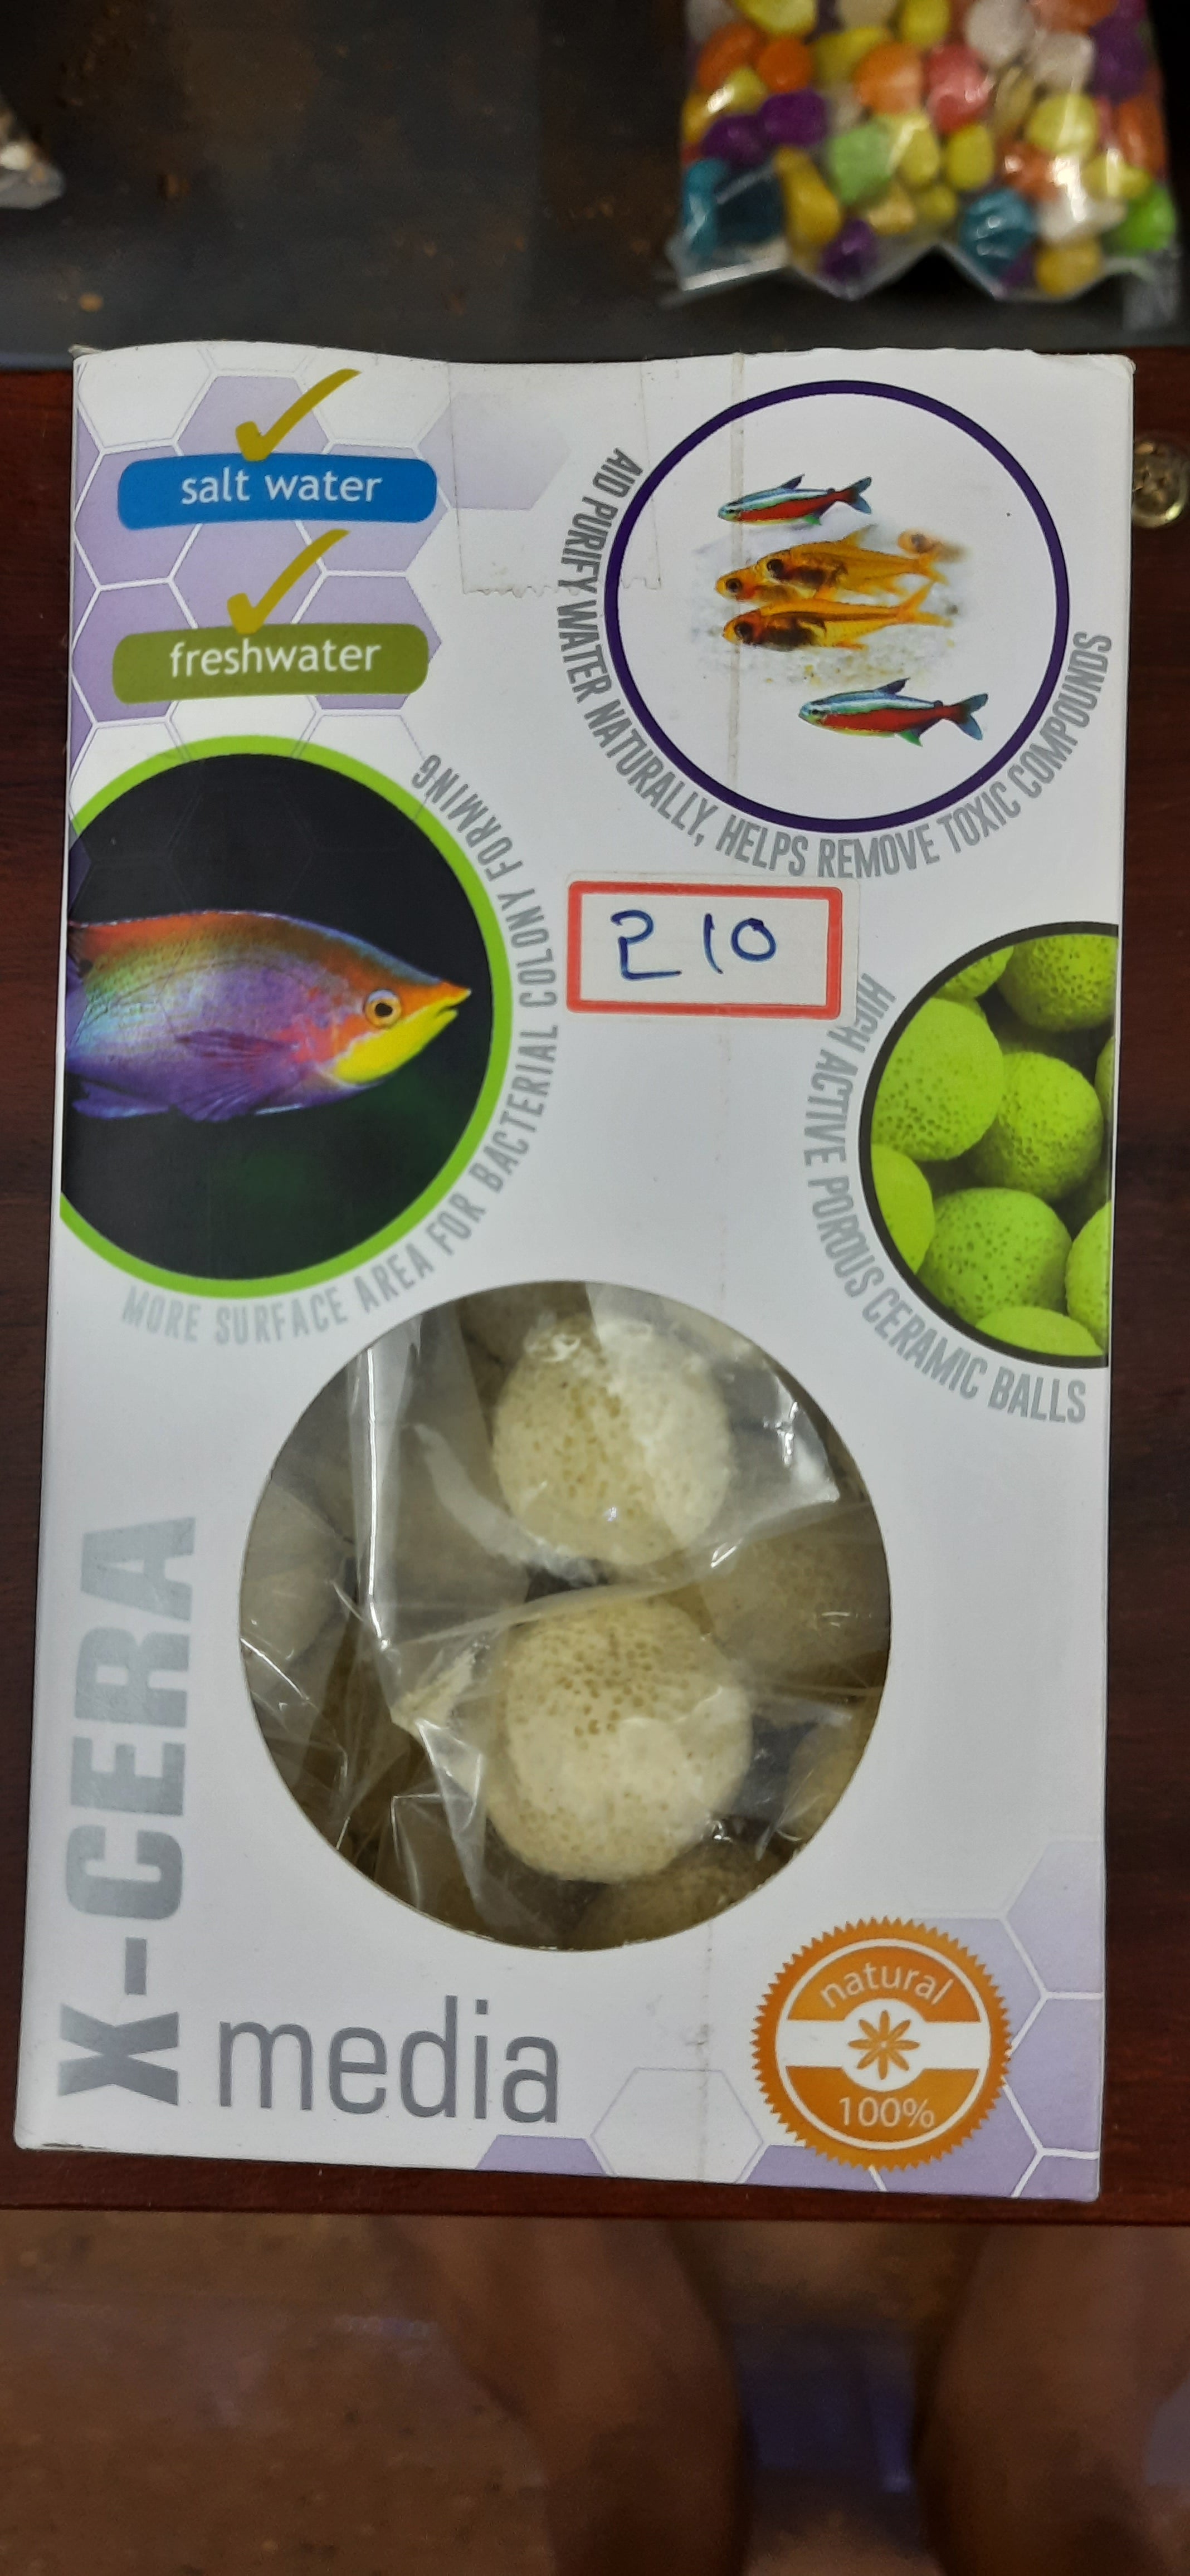 X-CERA Imported Natural Ceramic Balls Filter Media for Fresh and Salt Water